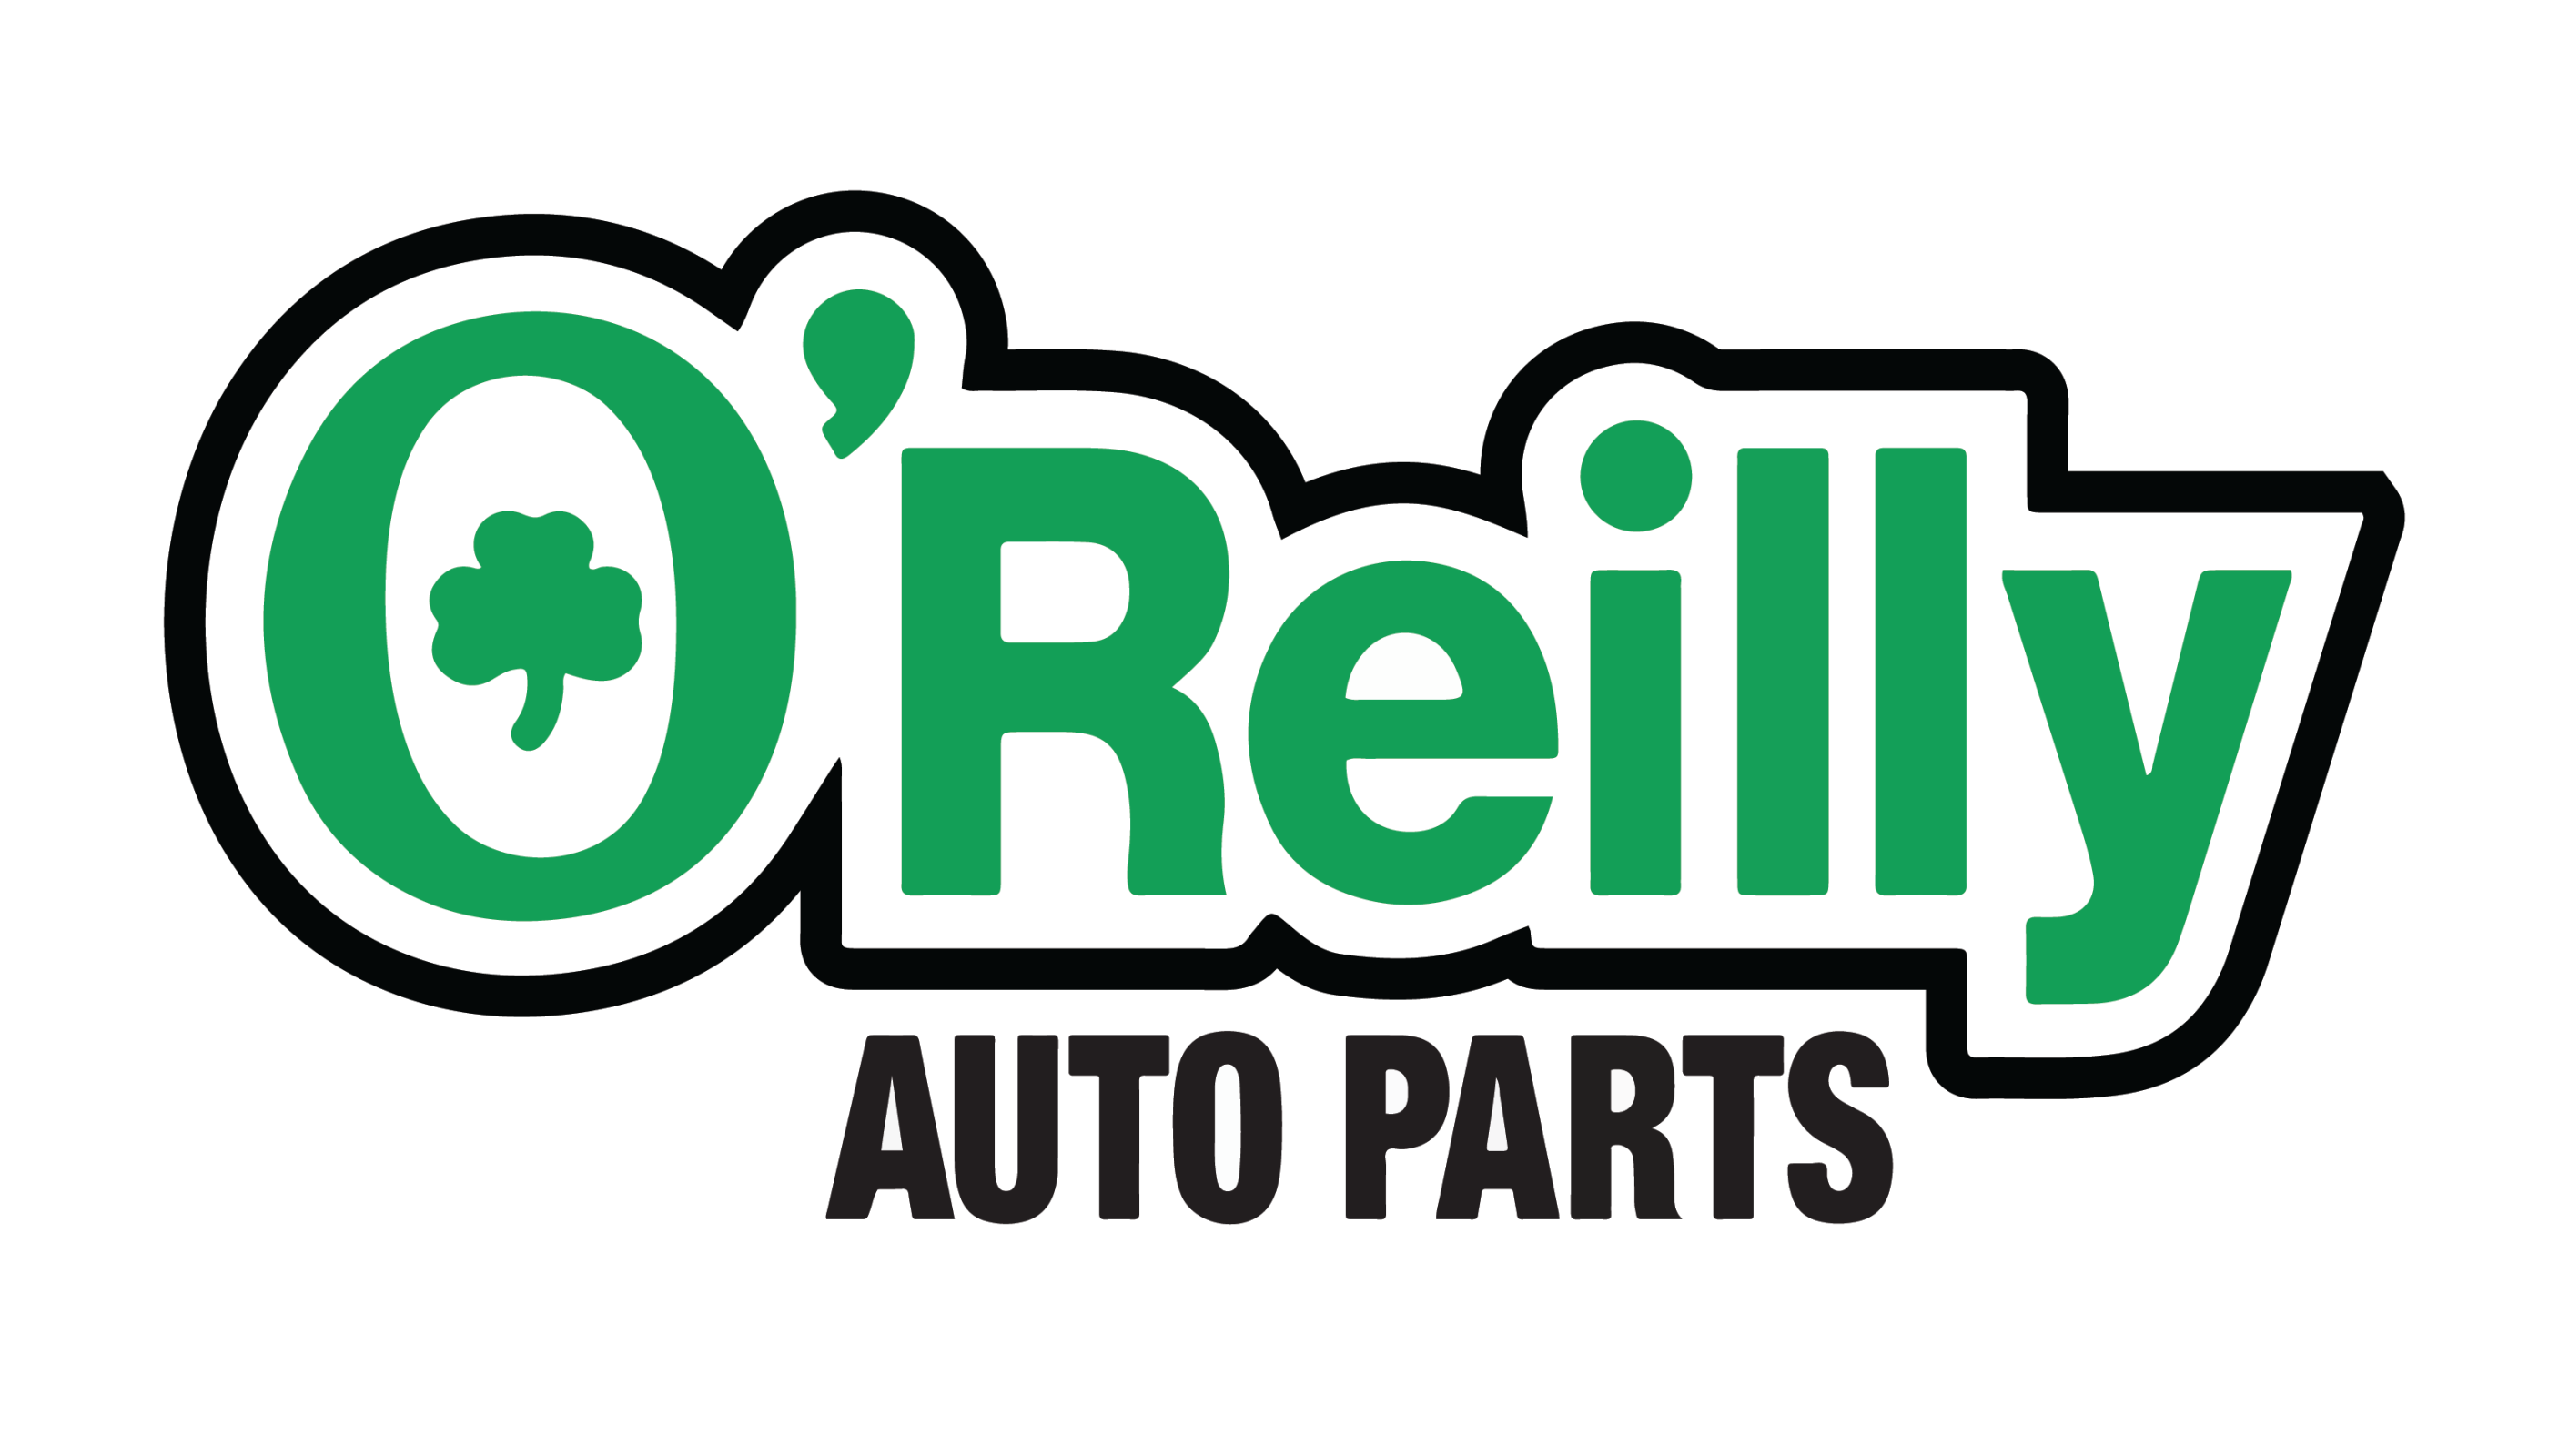 O'Reilly Auto - Auto parts's Image